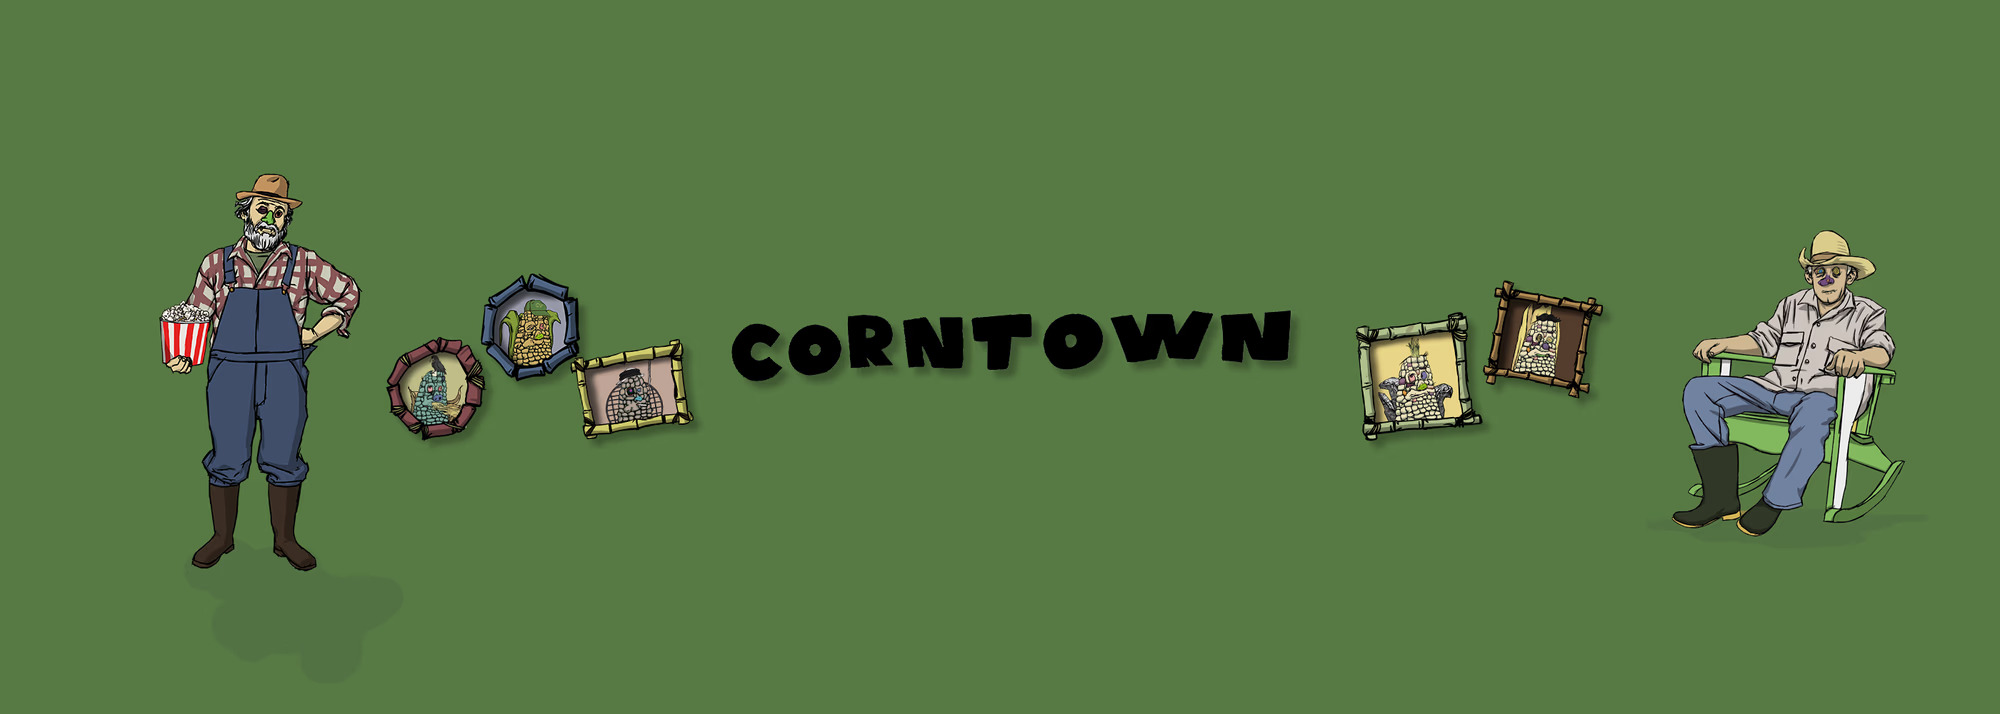 Corntown_deployer banner